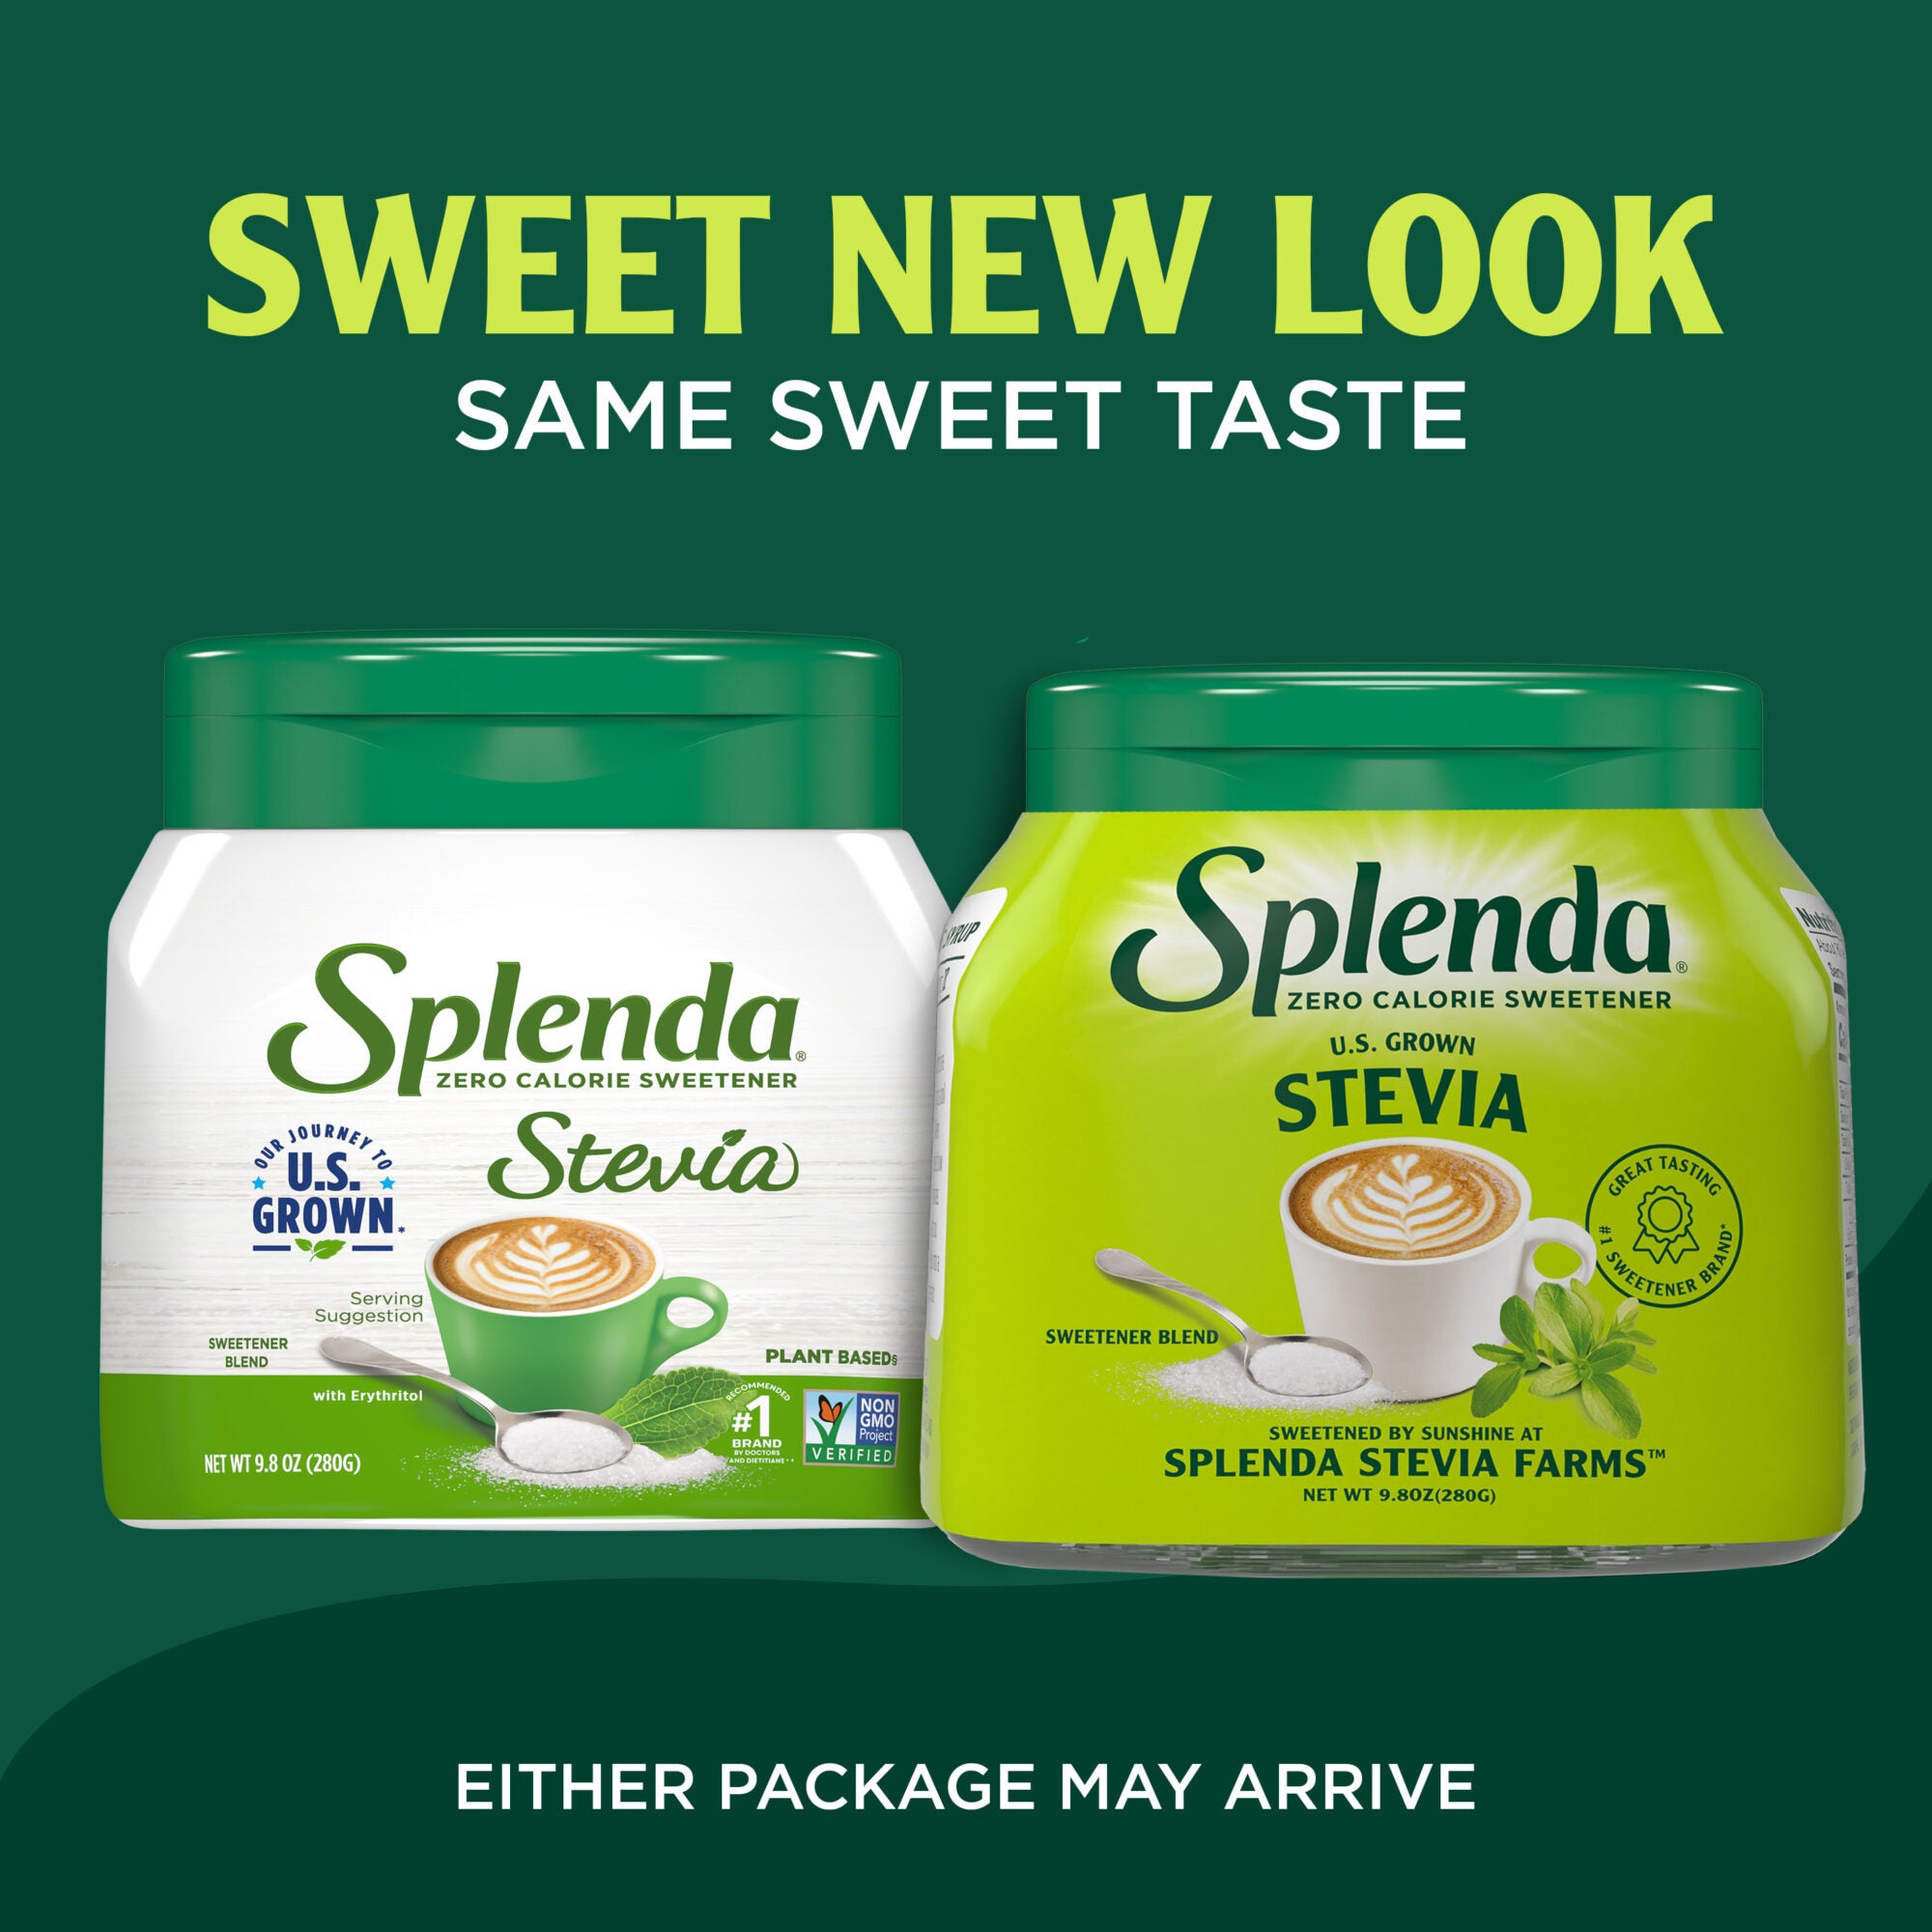 Splenda U.S. Grown Stevia Small Jar - Same Sweet Taste